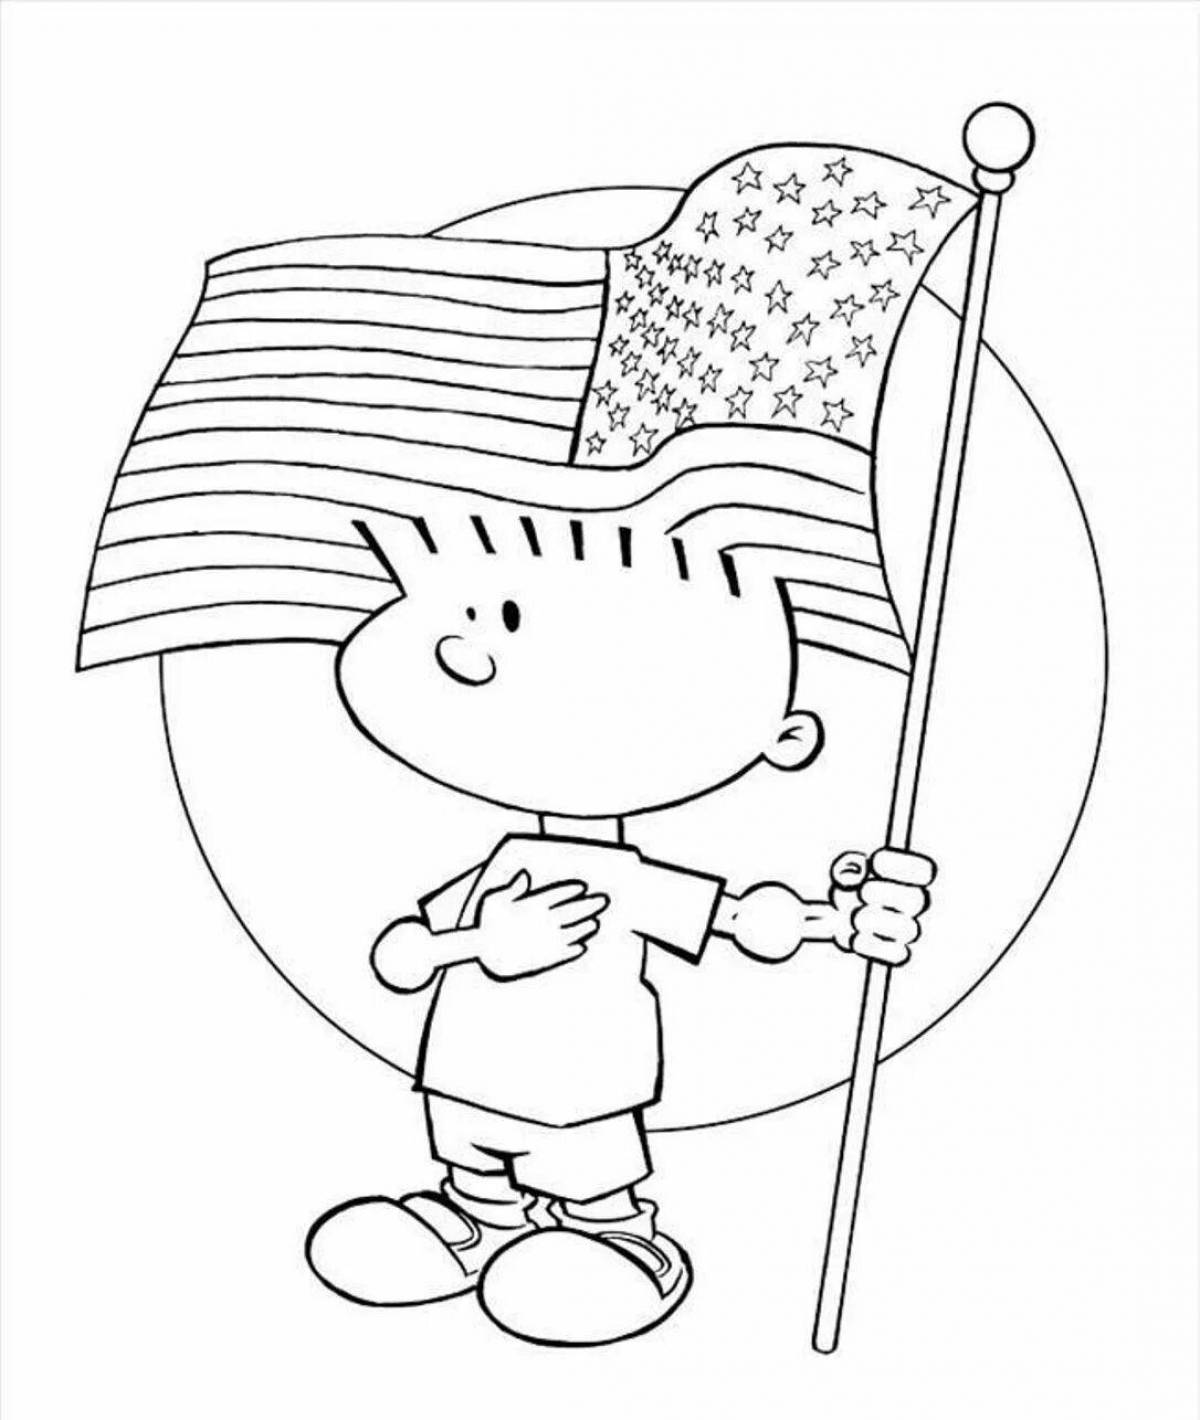 Festive patriotic coloring book for kids